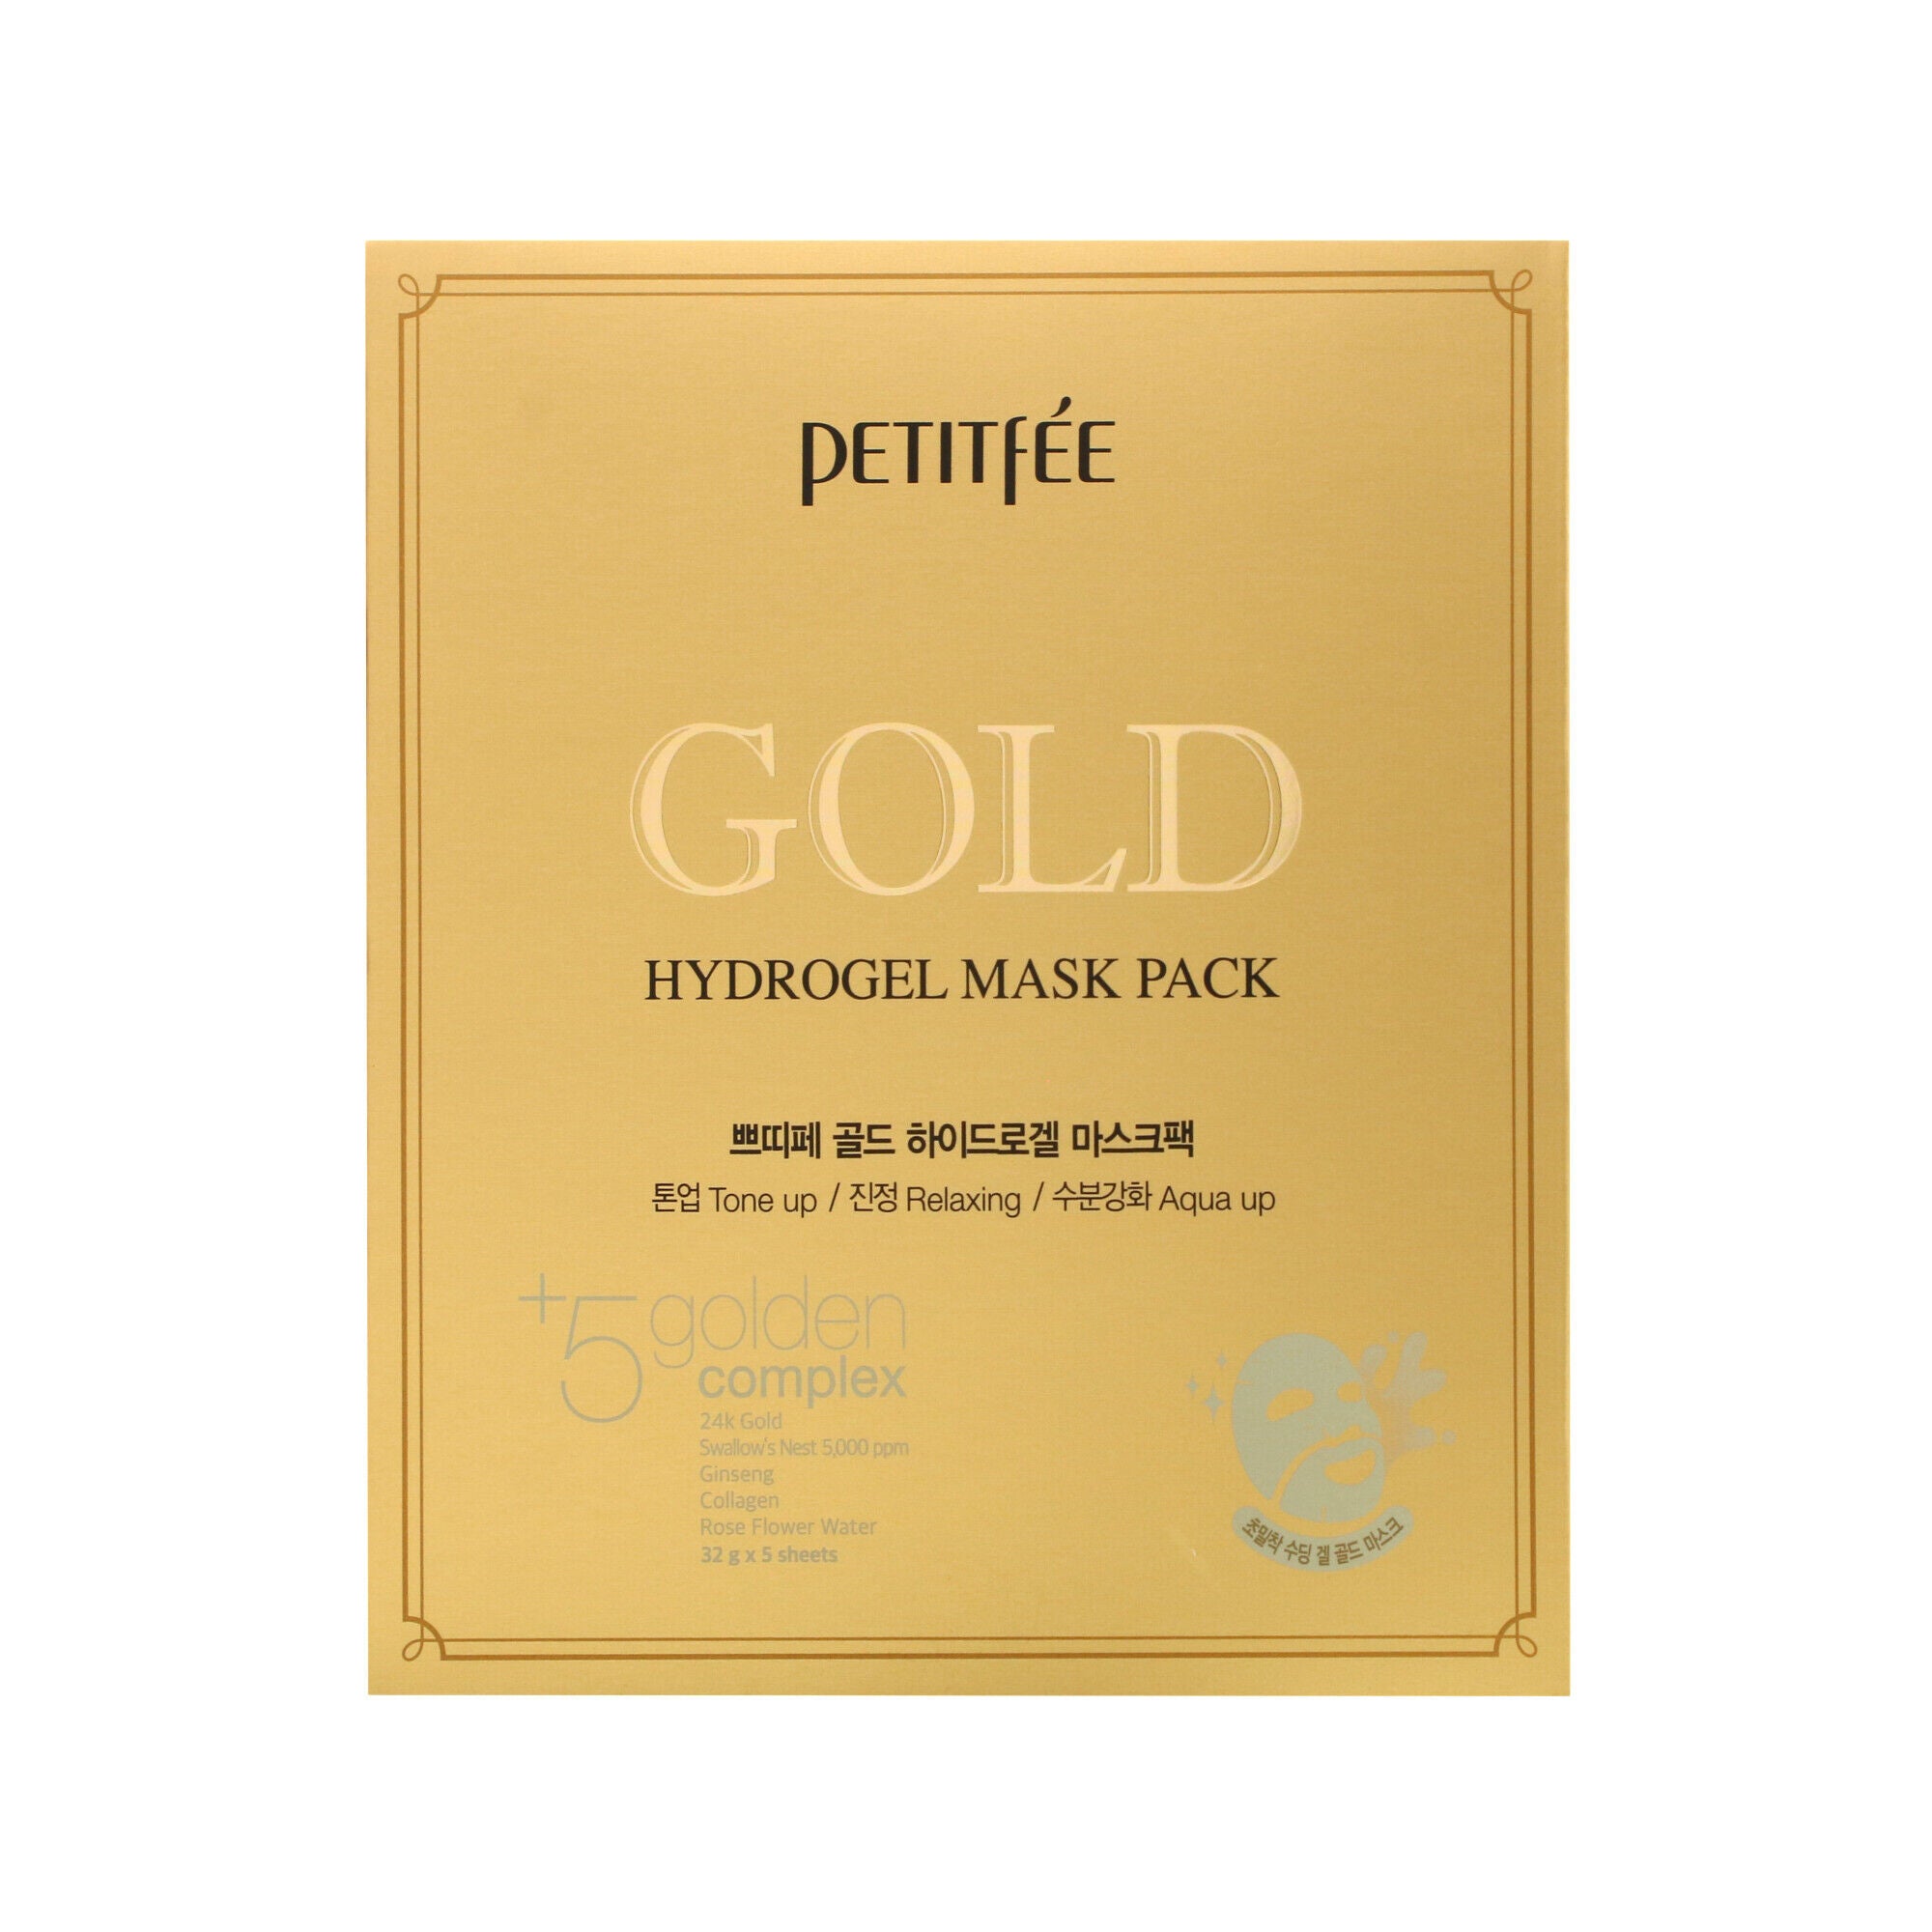 Petitfee Gold Hydrogel Mask